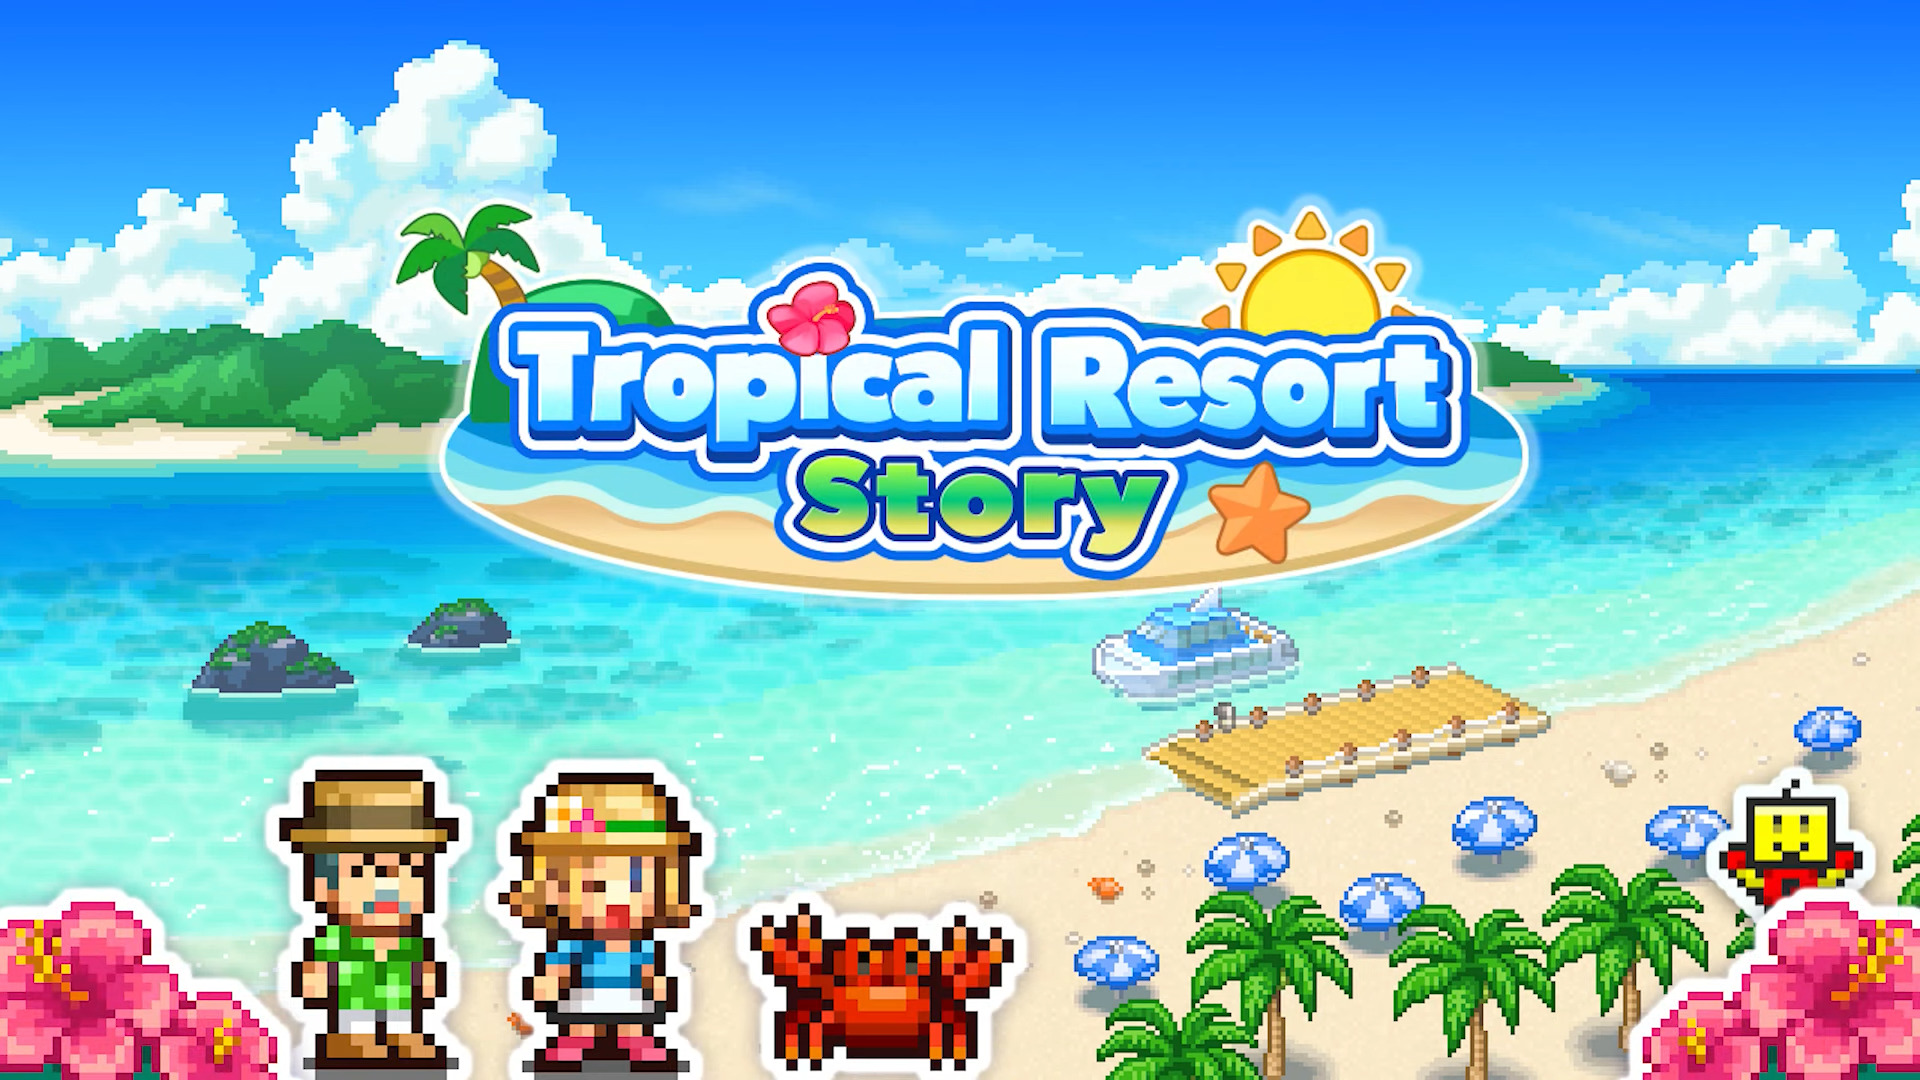 Download Tropical Resort Story für Android kostenlos.